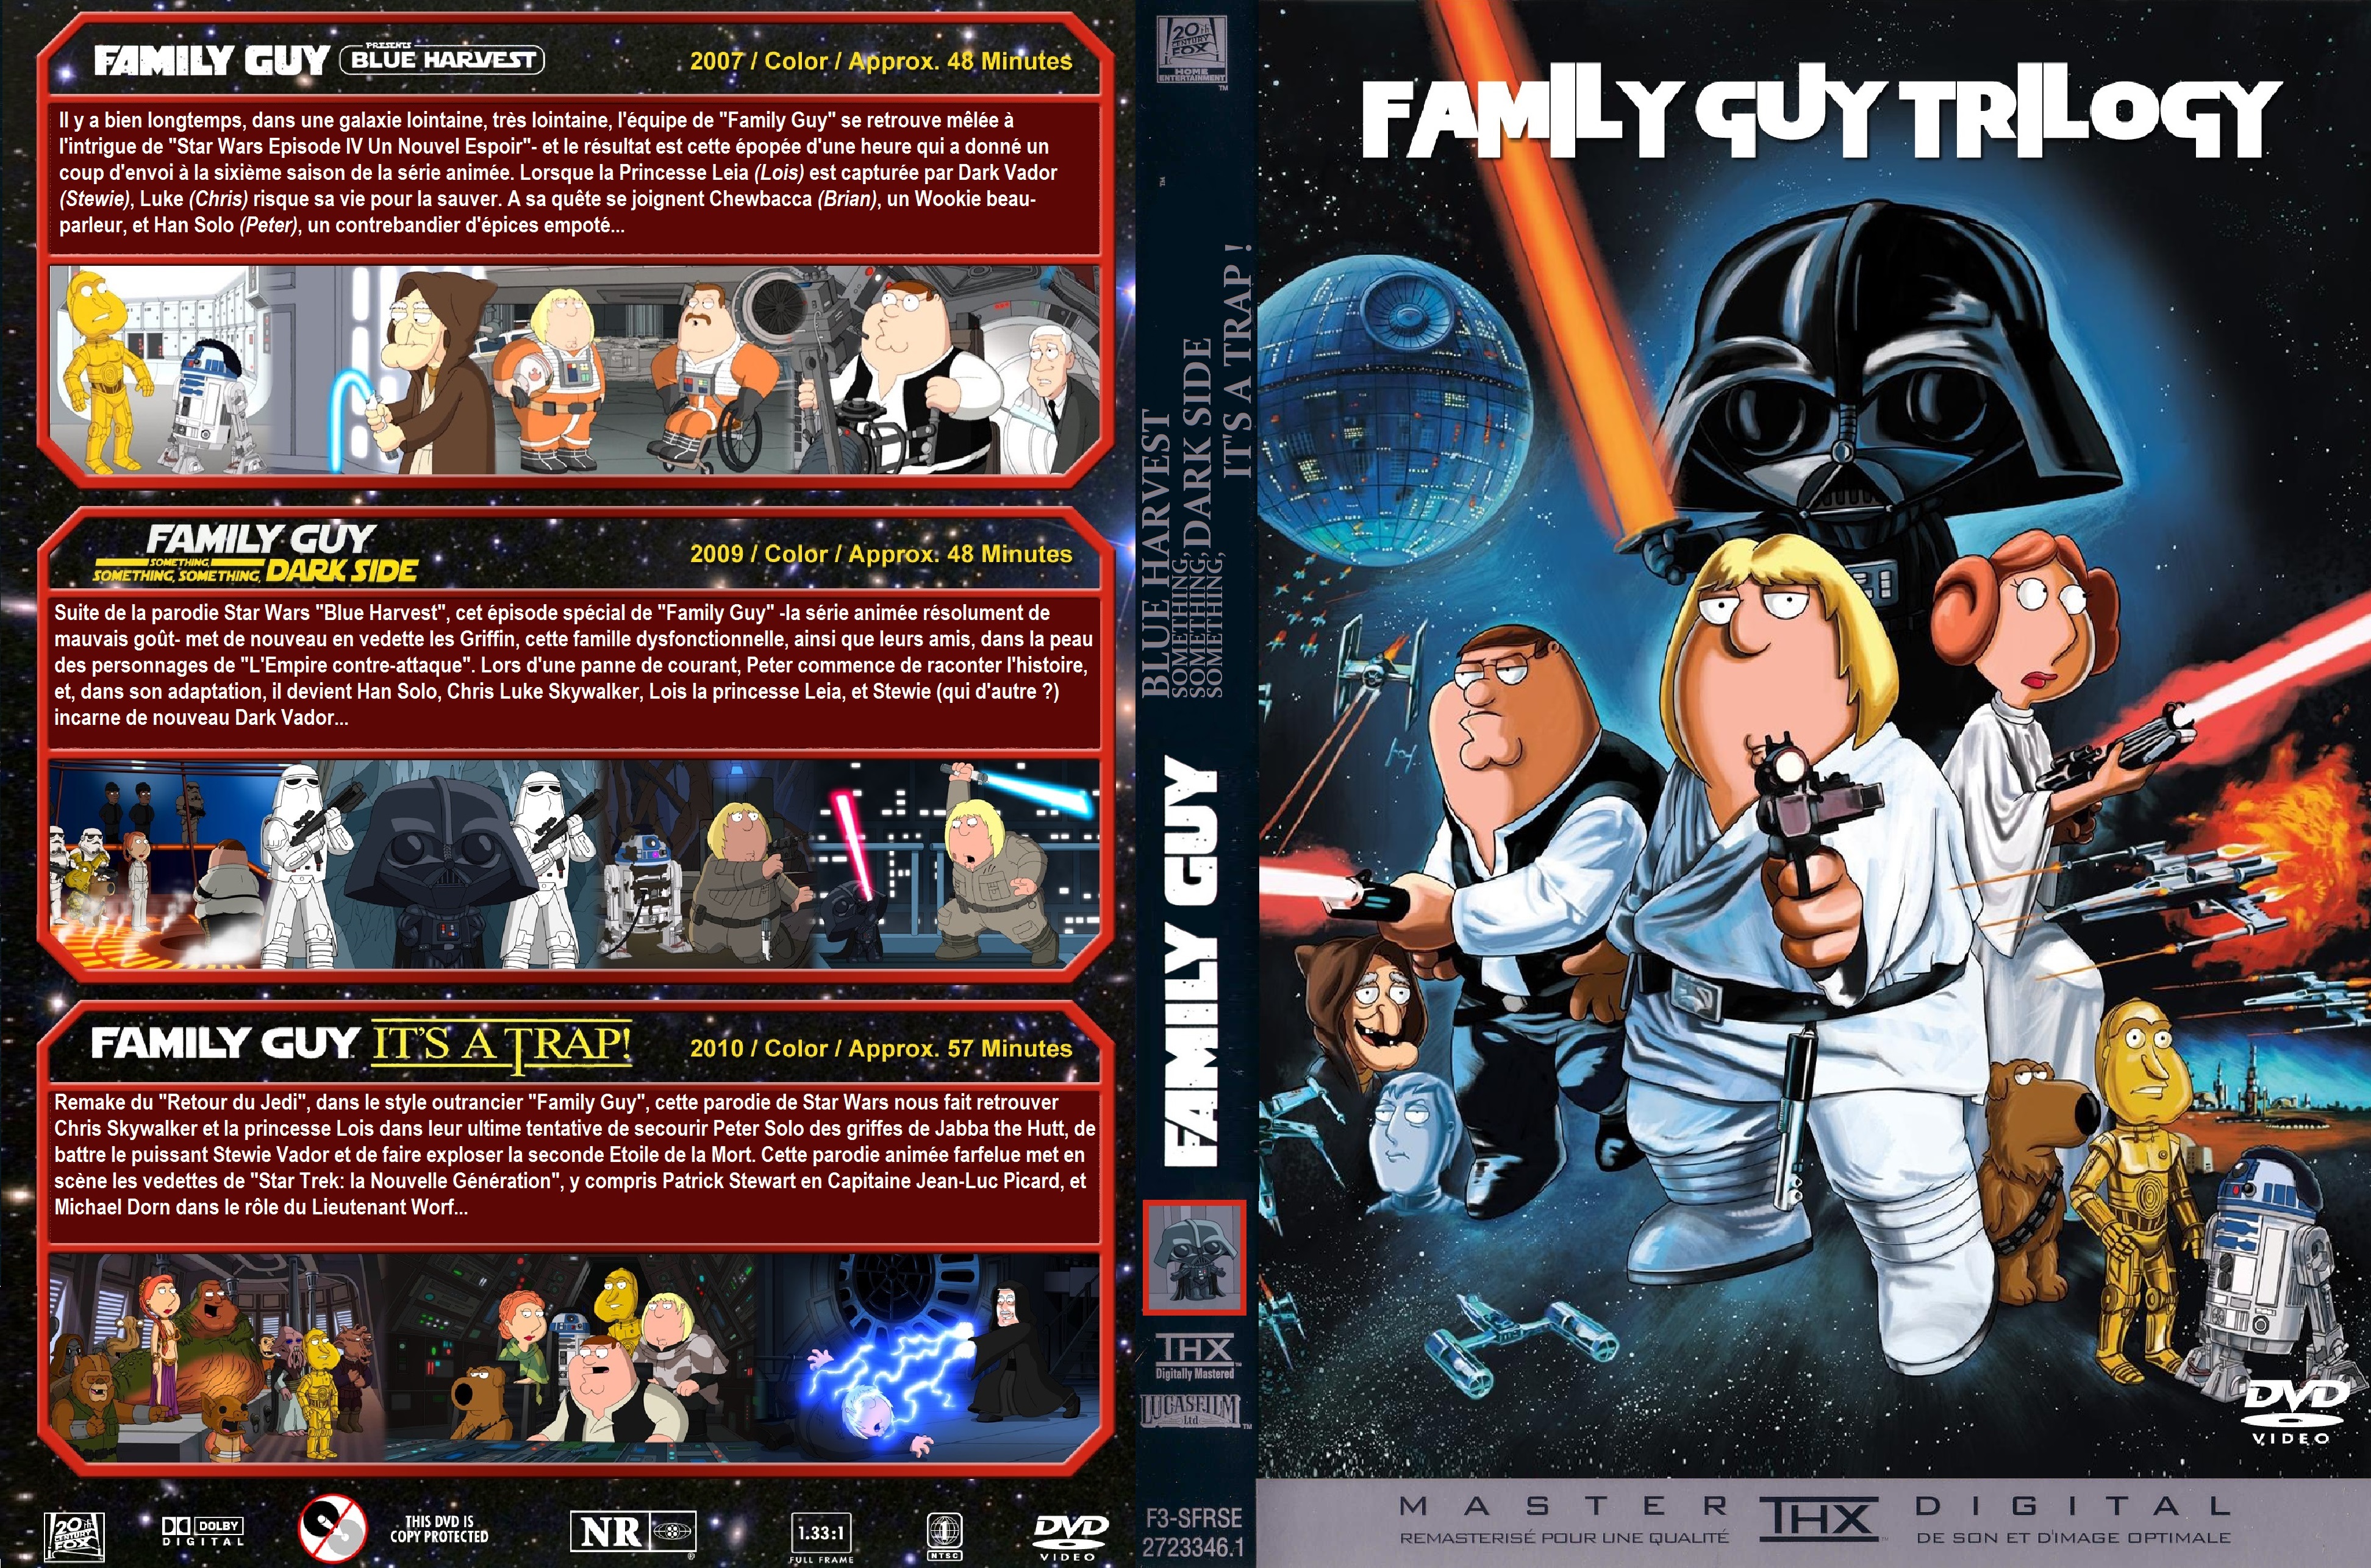 Jaquette DVD Family Guy trilogie Star Wars custom